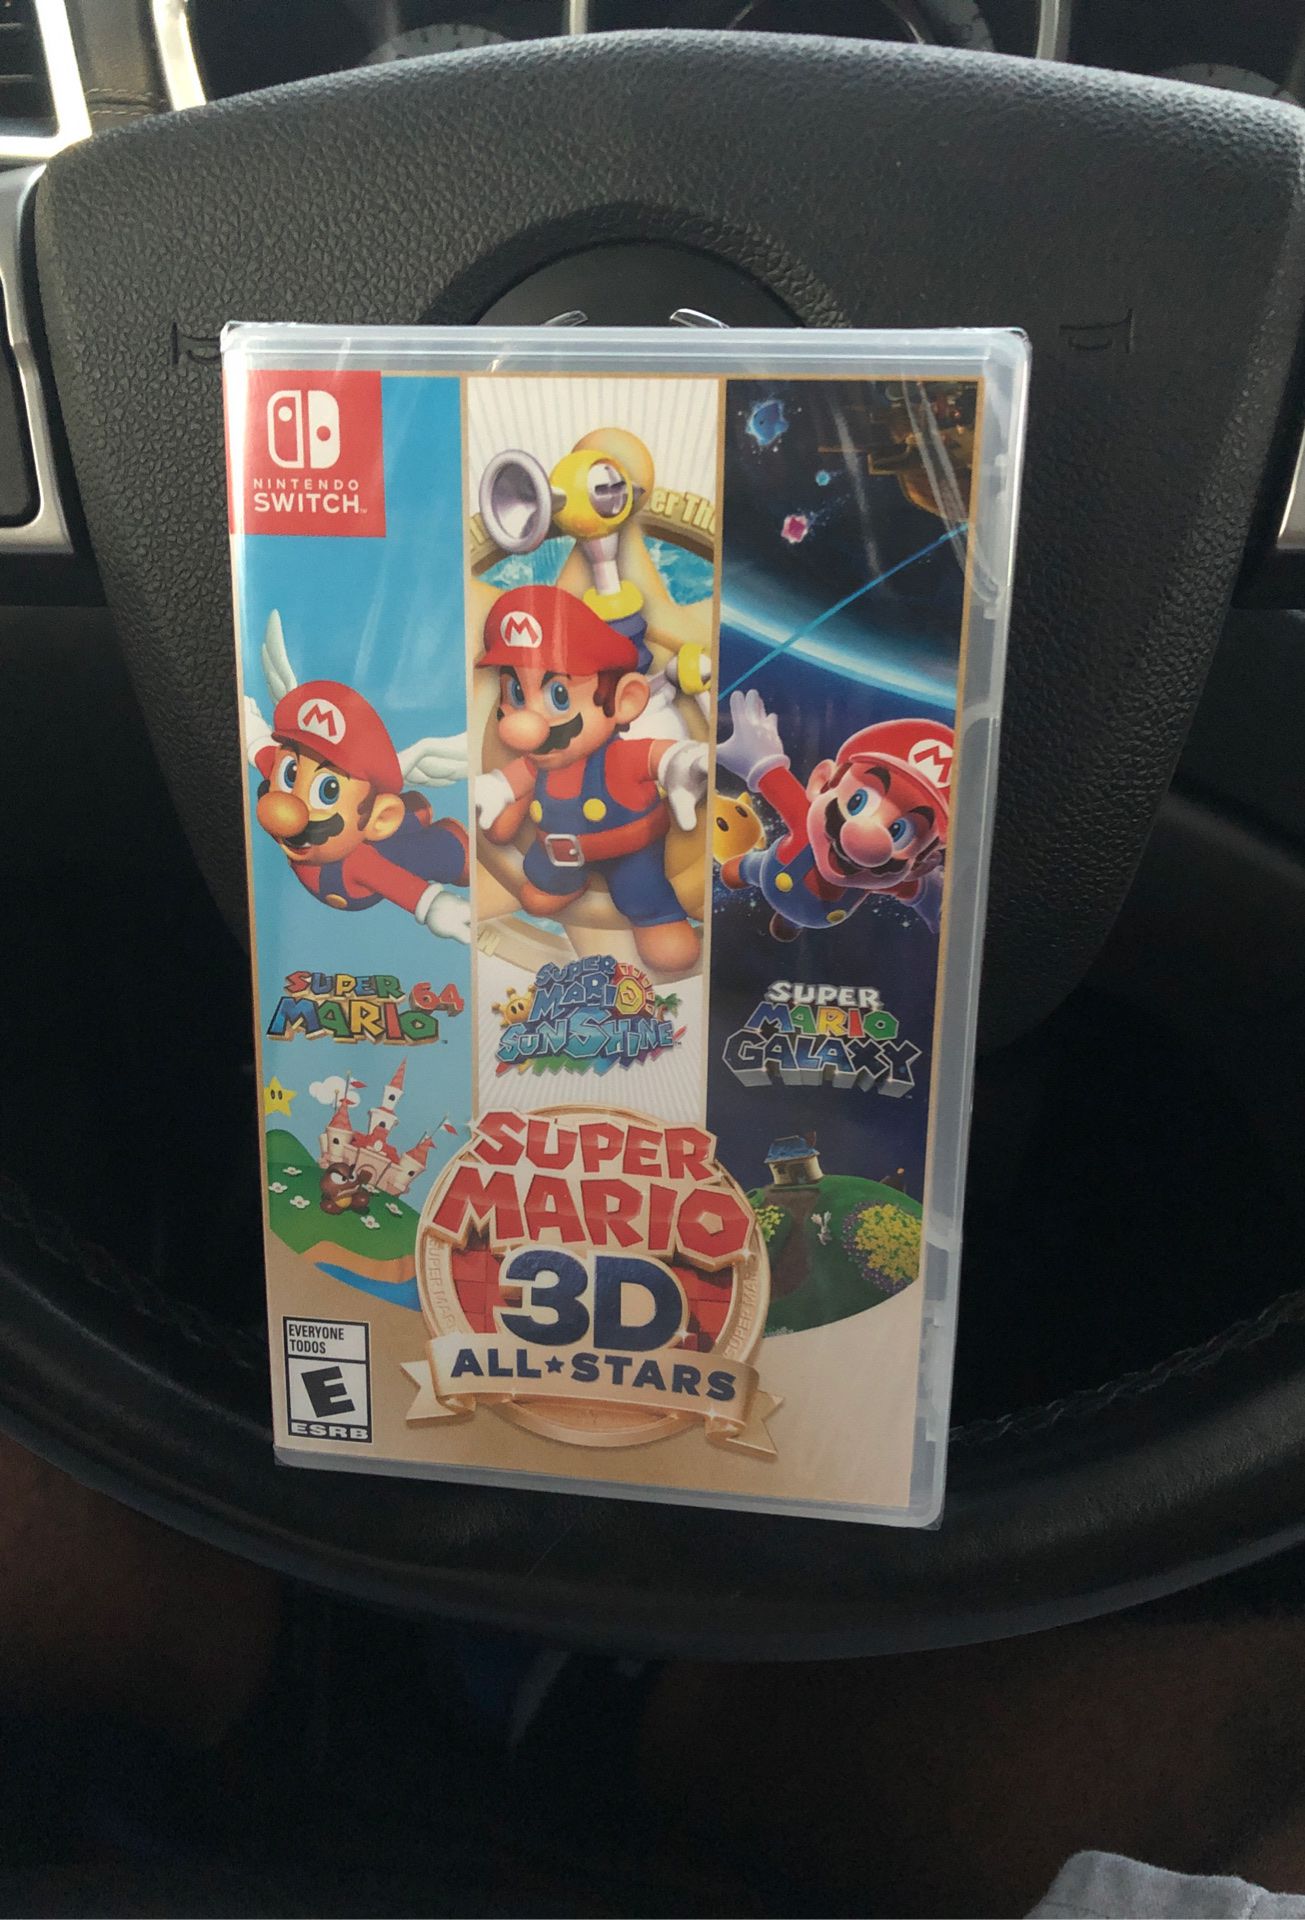 Super Mario all stars-limited edition